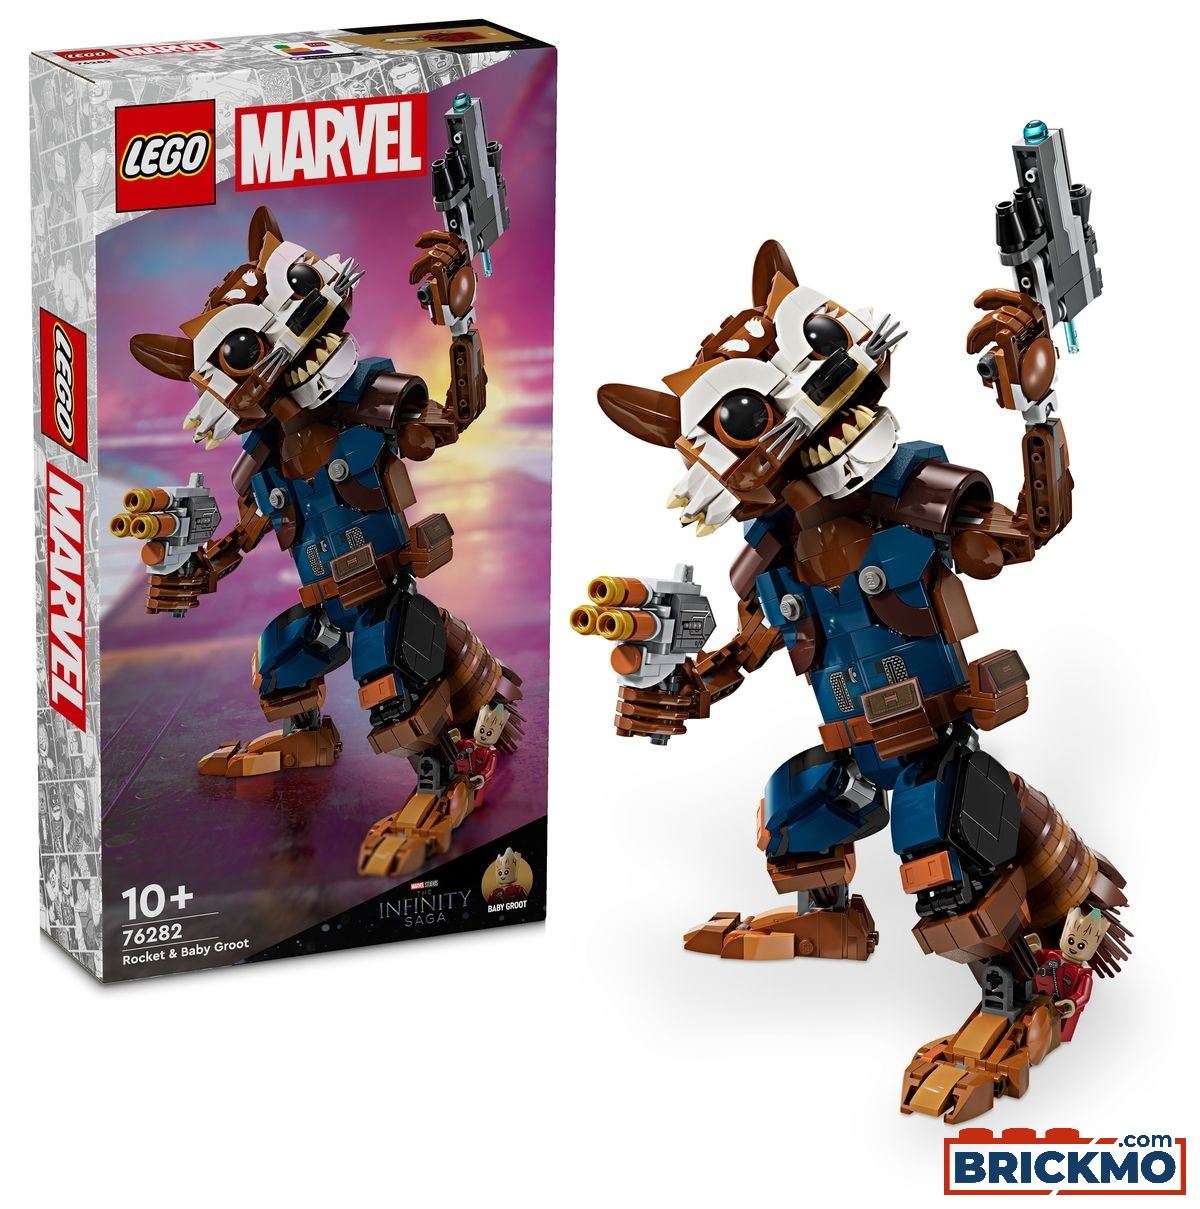 LEGO Marvel Super Heroes 76282 Rocketa i Małego Groota 76282